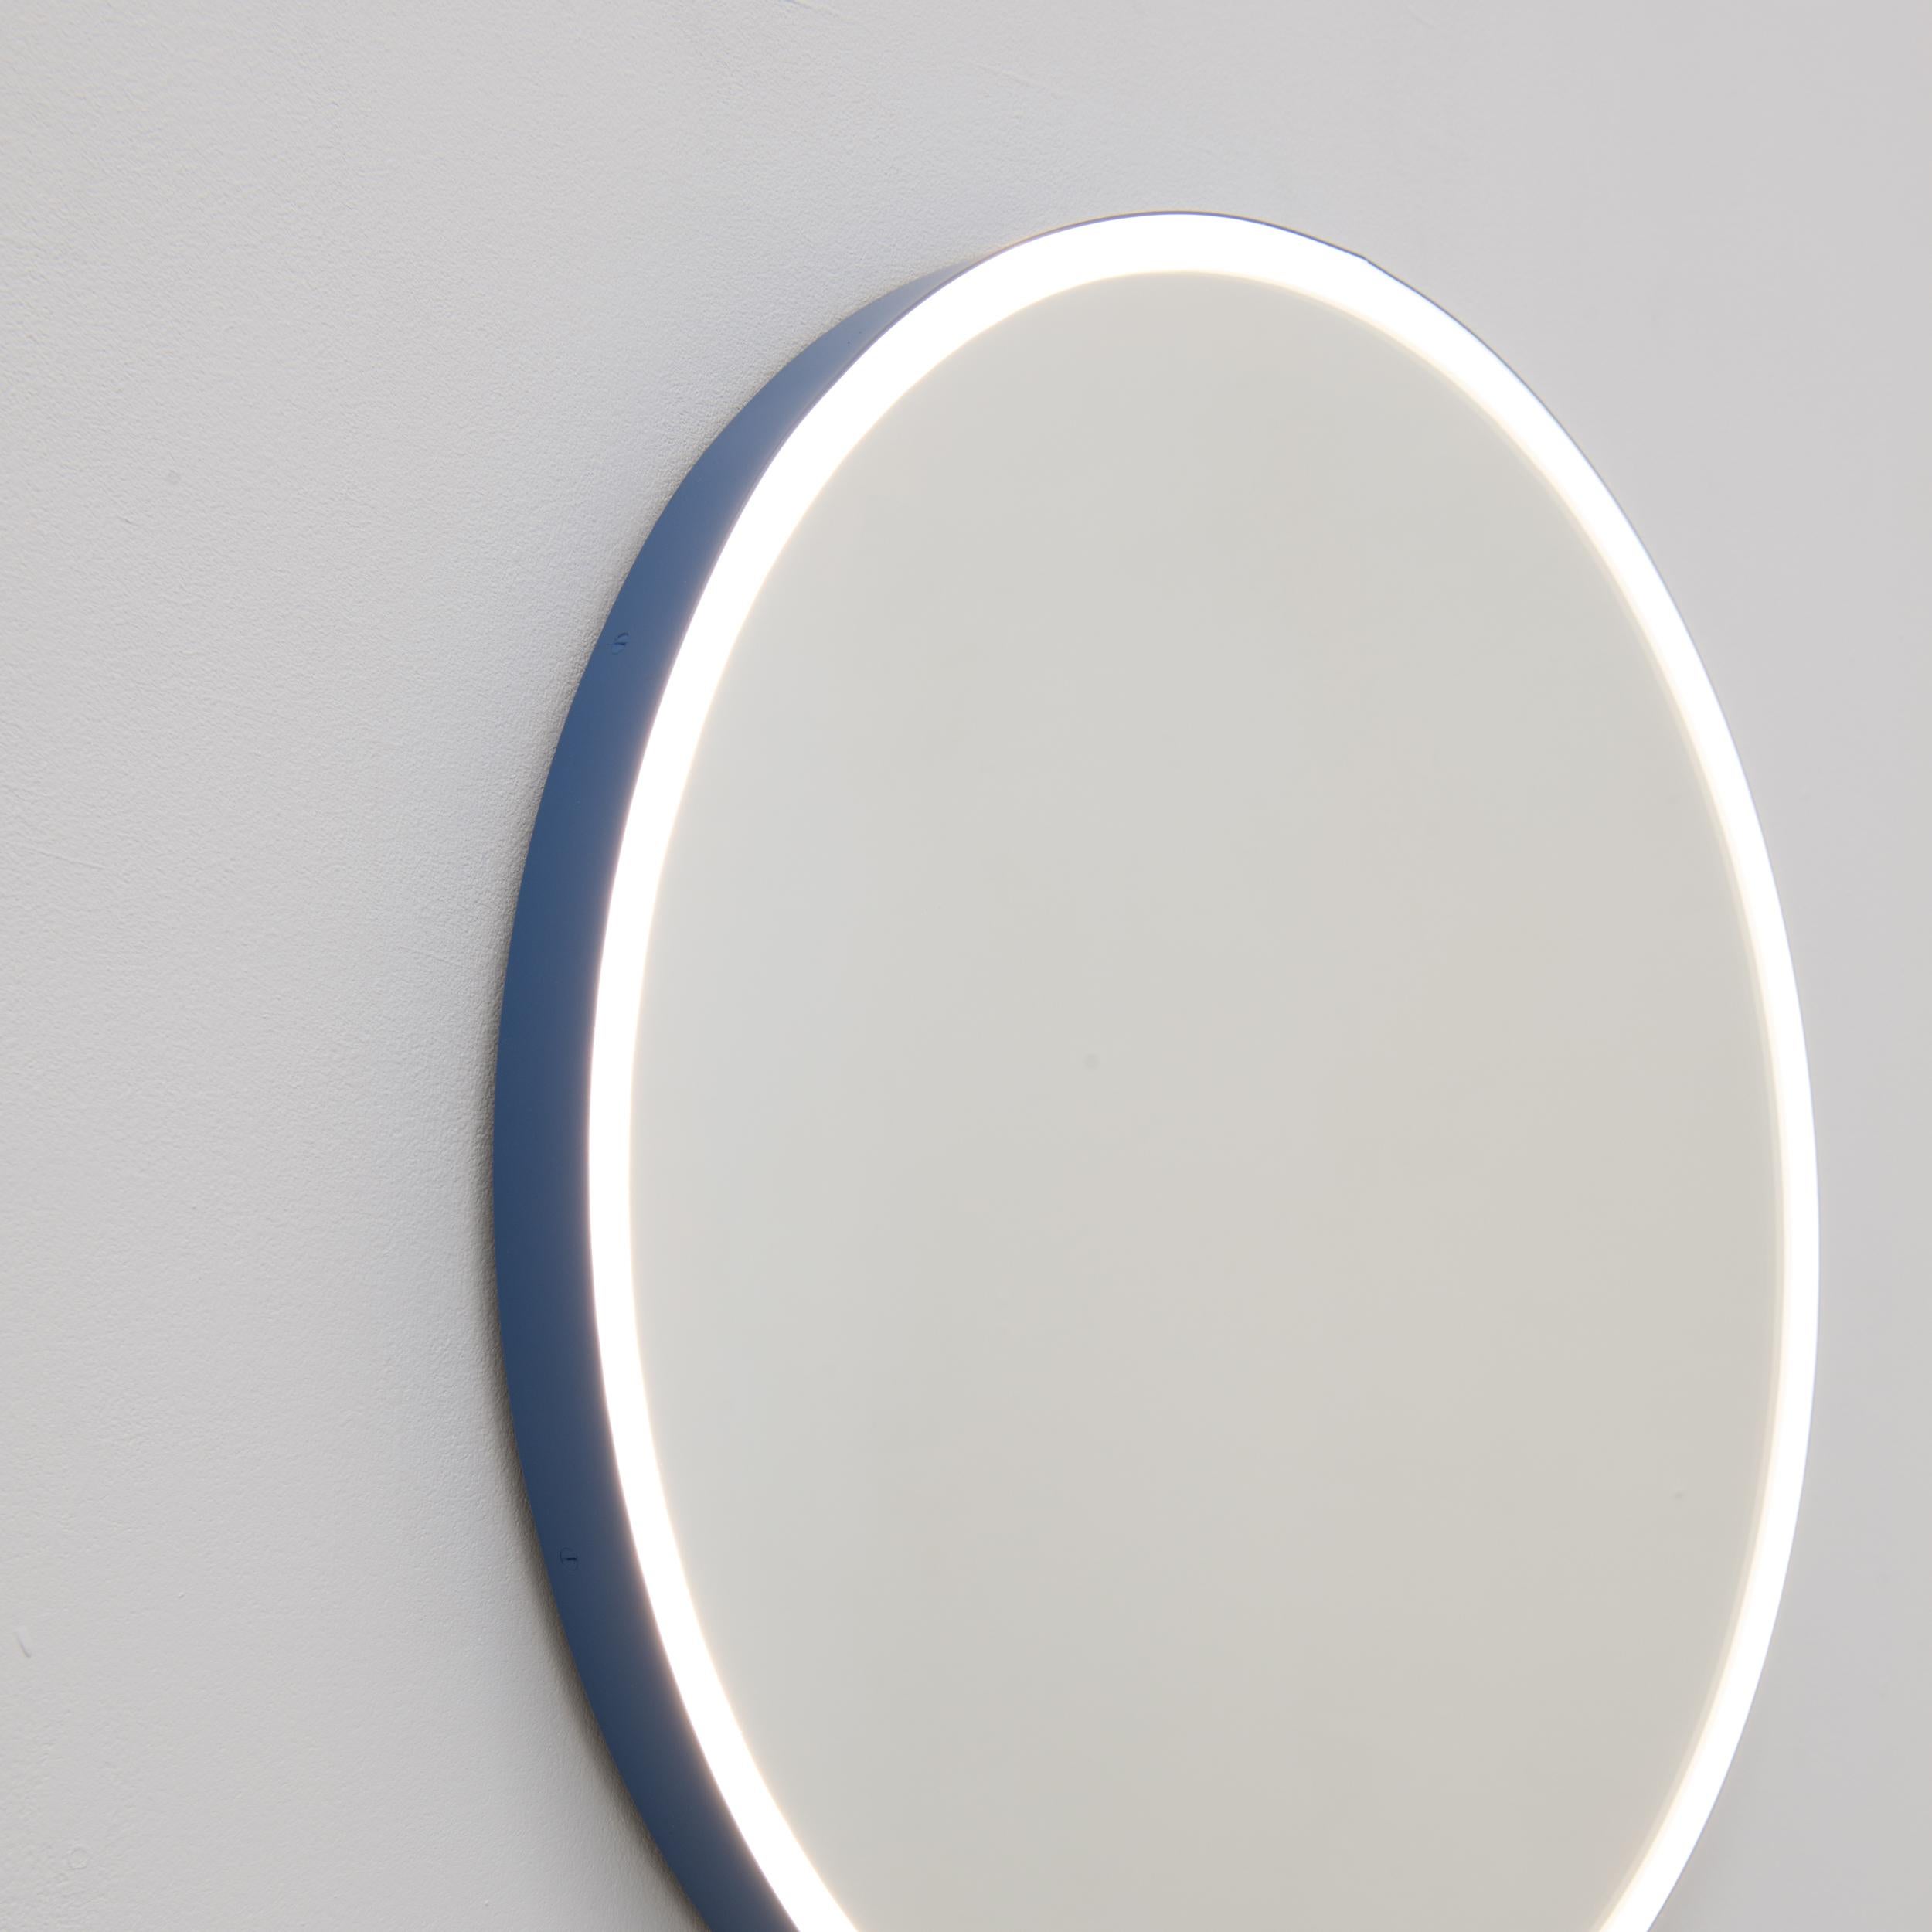 Powder-Coated Orbis Front Illuminated Round Bespoke Modern Mirror with Blue Frame, Regular For Sale